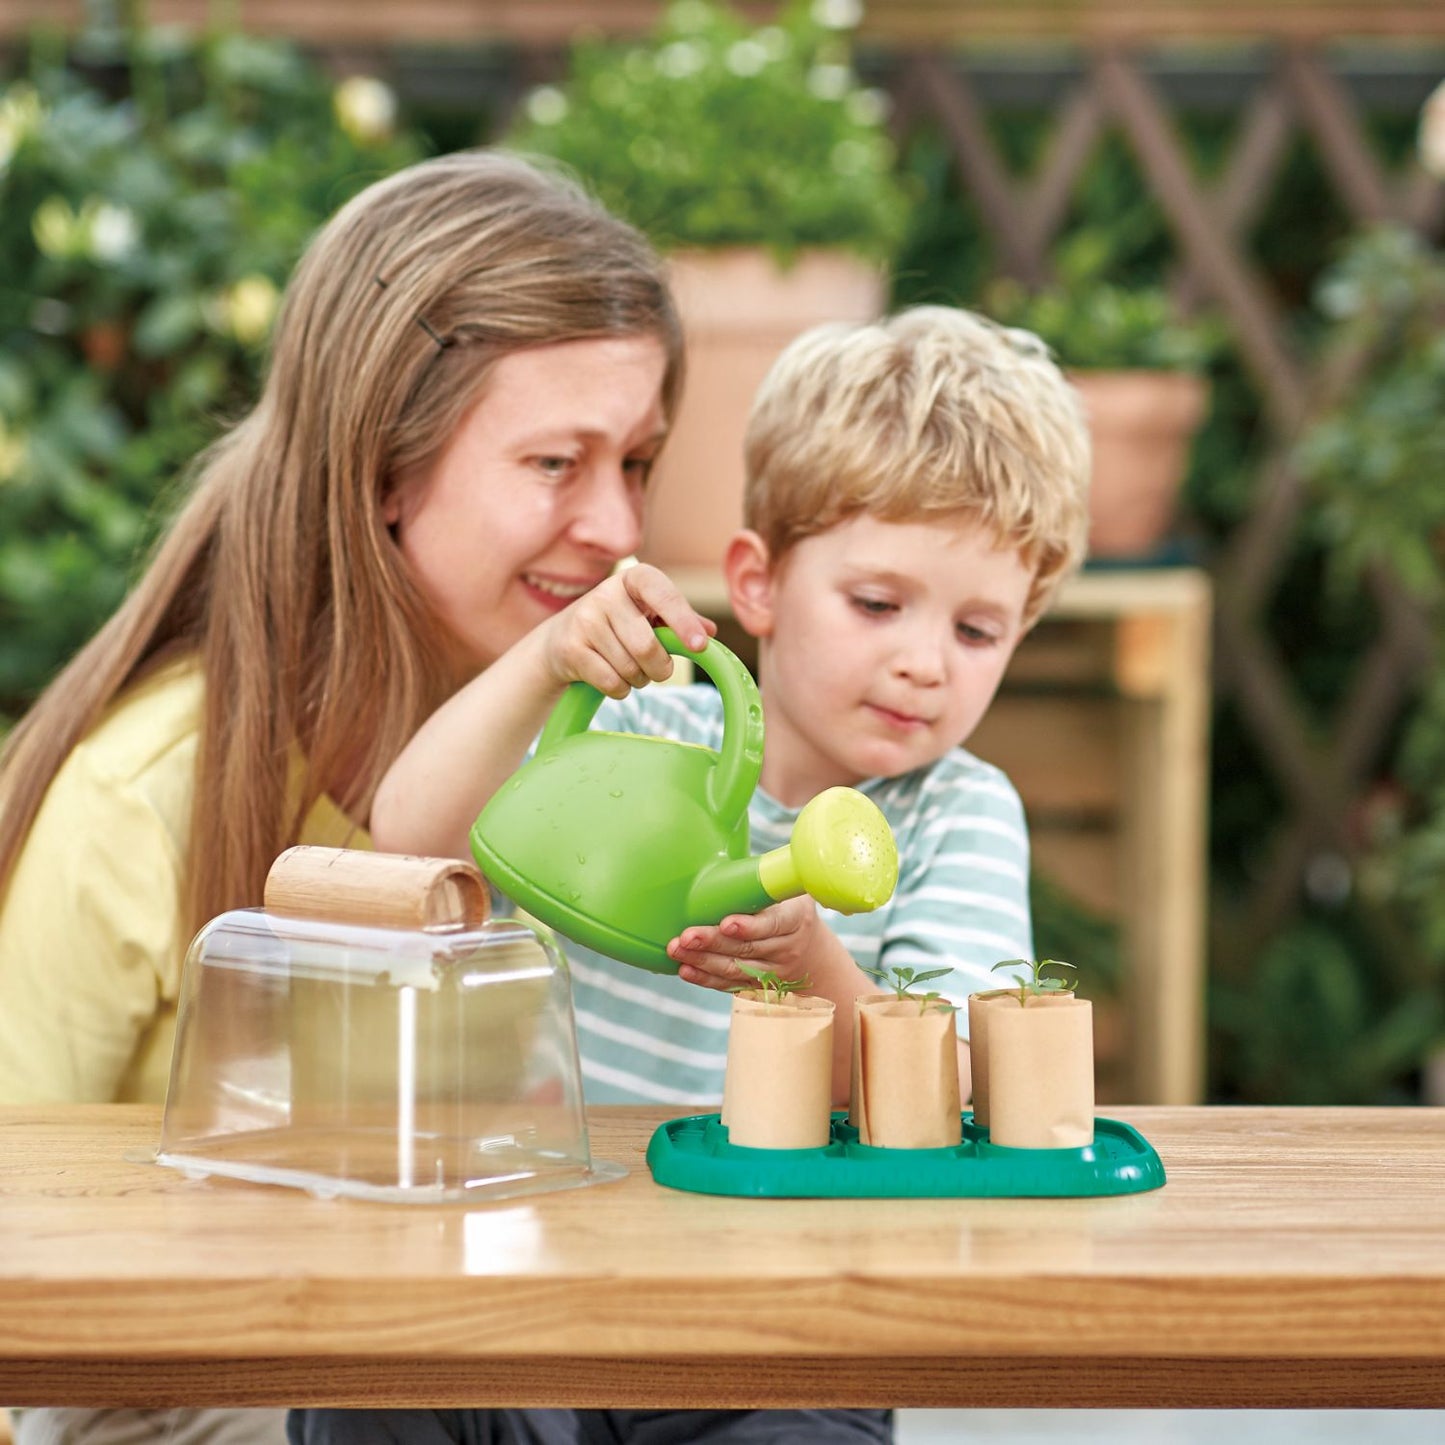 Growing Gardeners Greenhouse | Children's Mini Greenhouse and Growing Kit